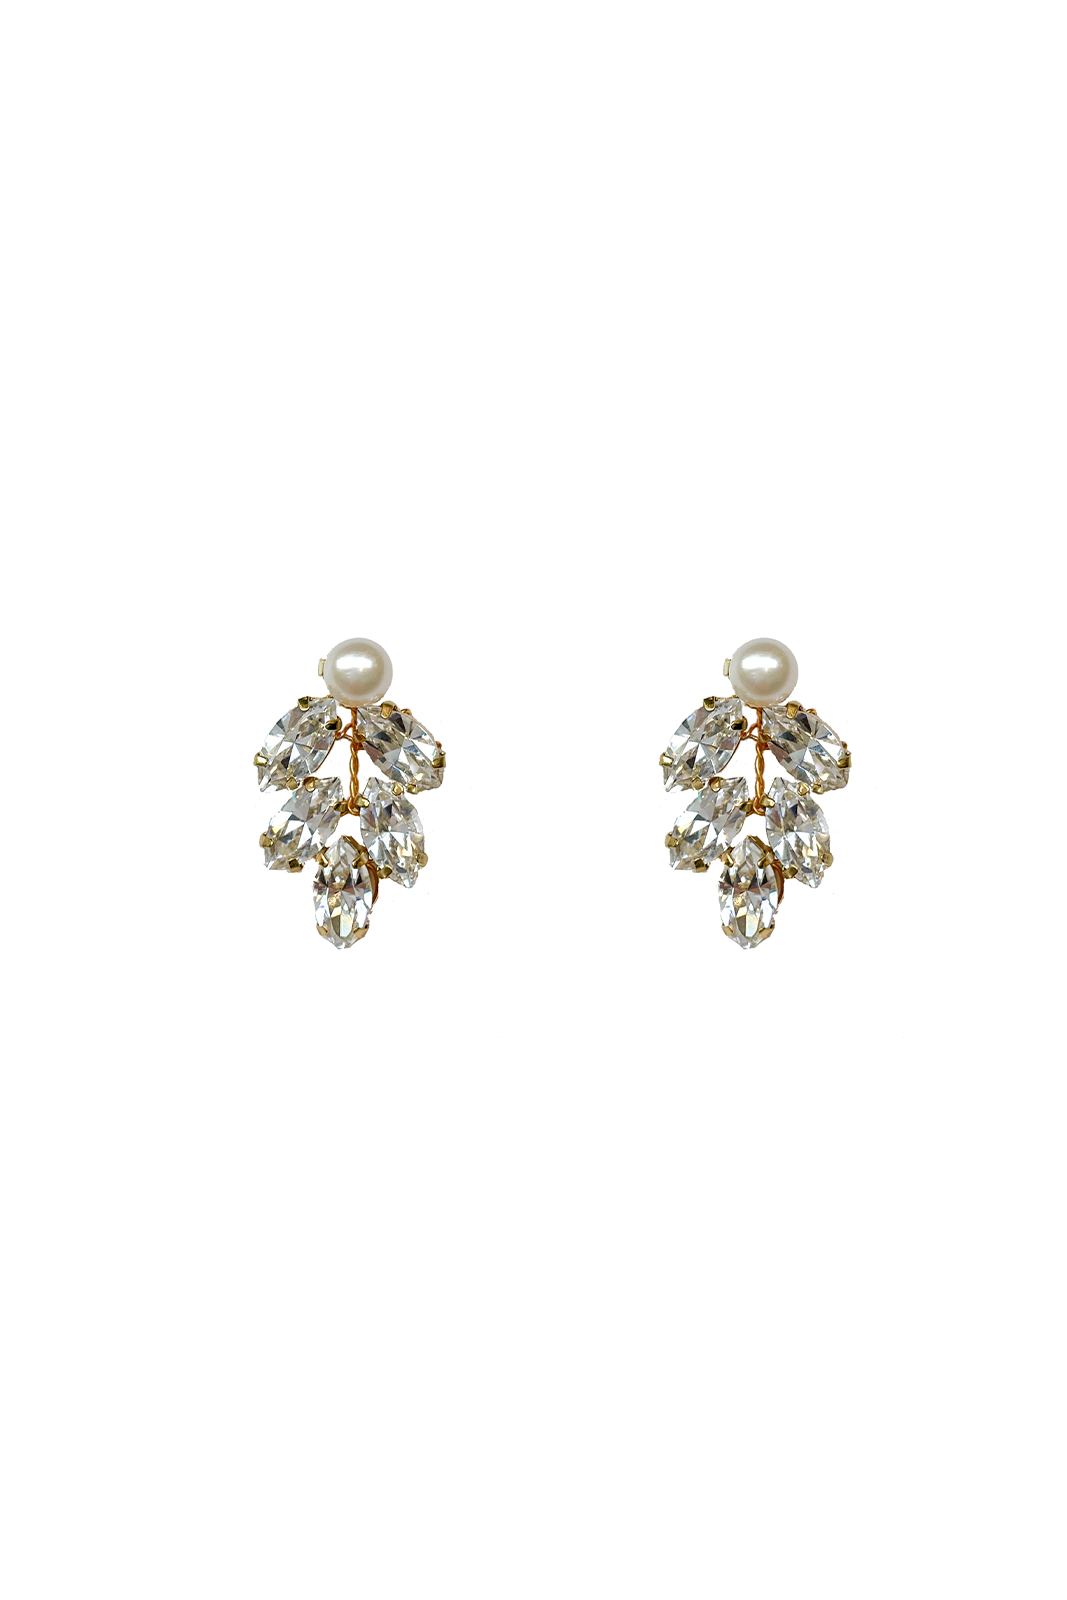 Kensington Grande Earrings - Silver